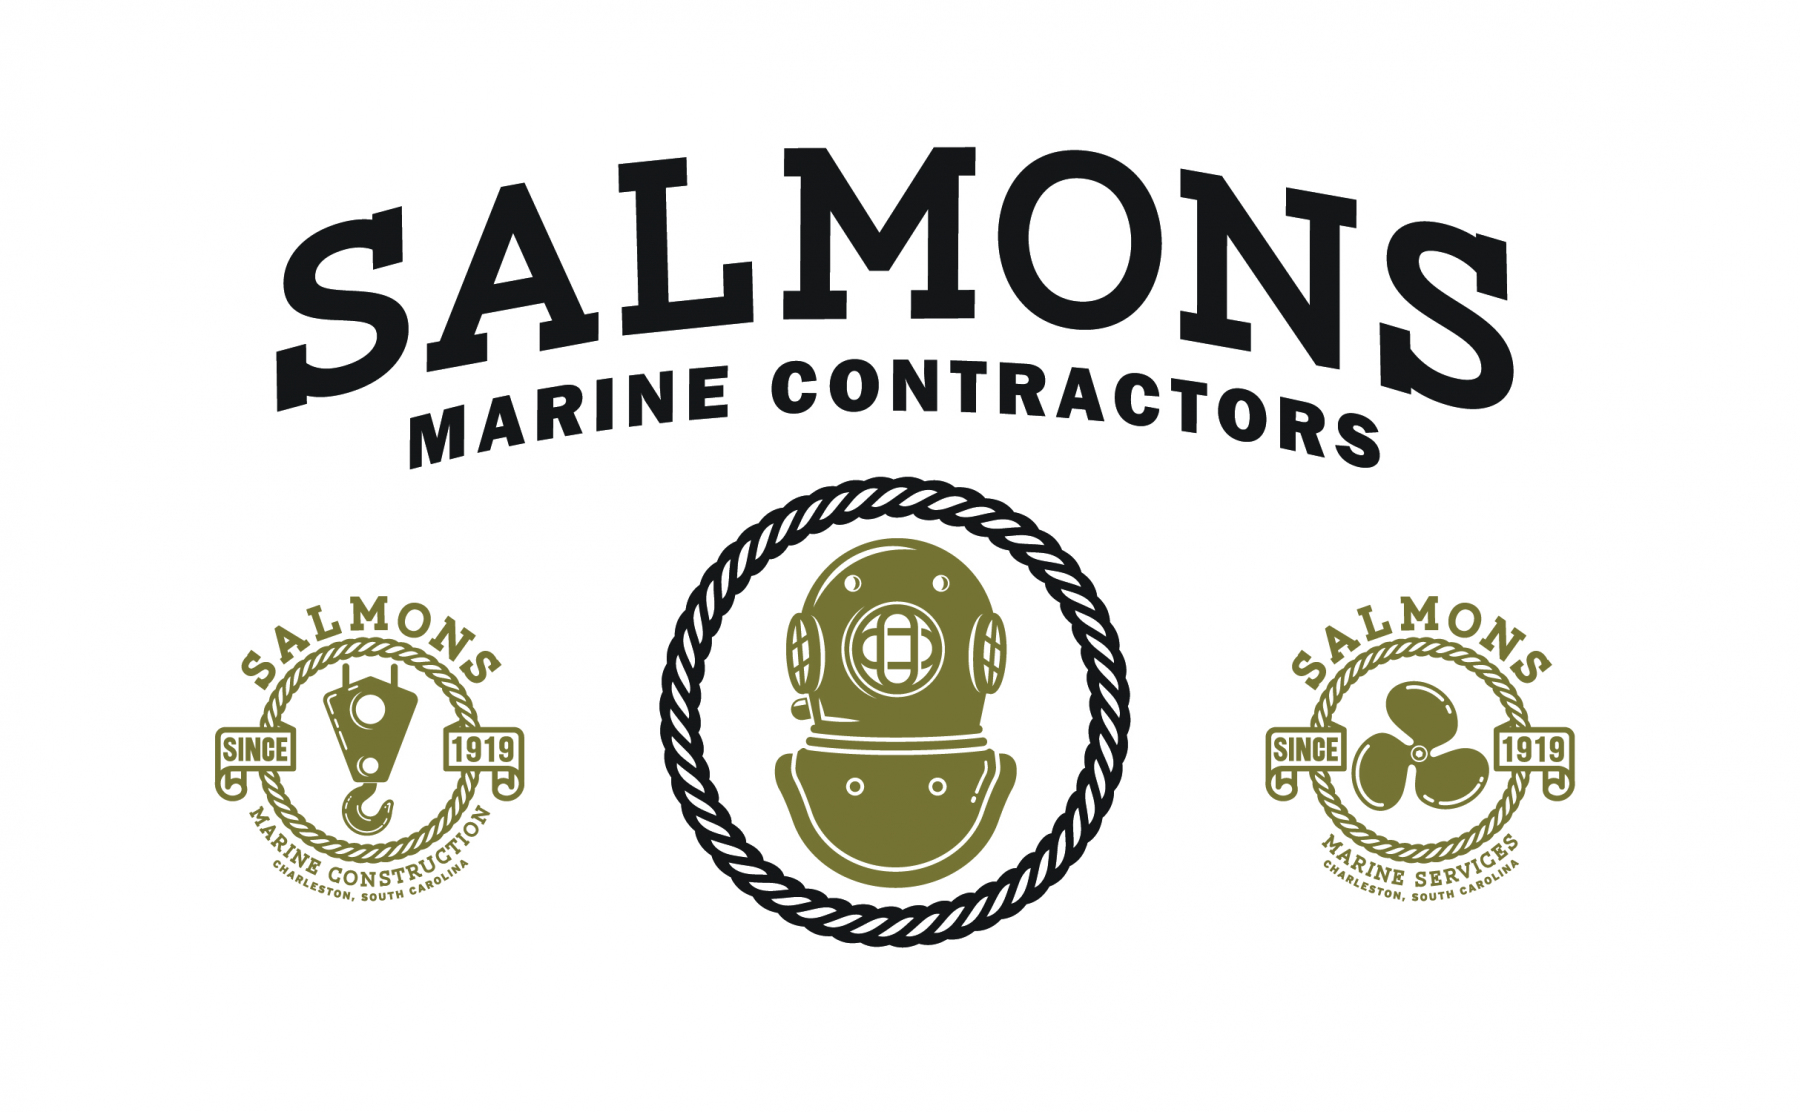 Salmons Marine